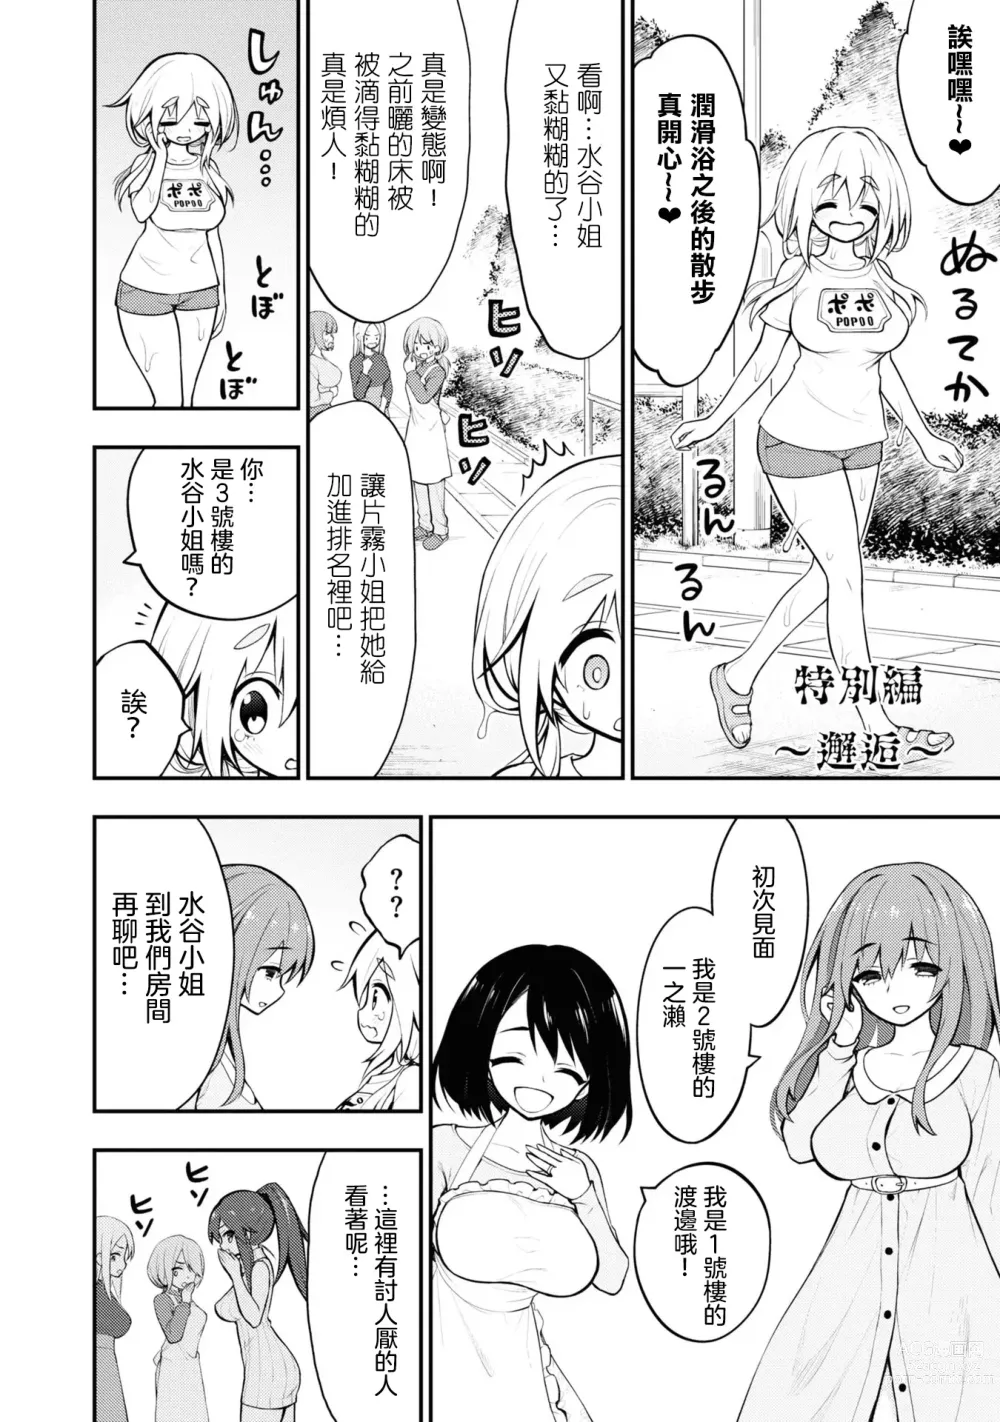 Page 162 of manga 淫獄小區 VOL.1